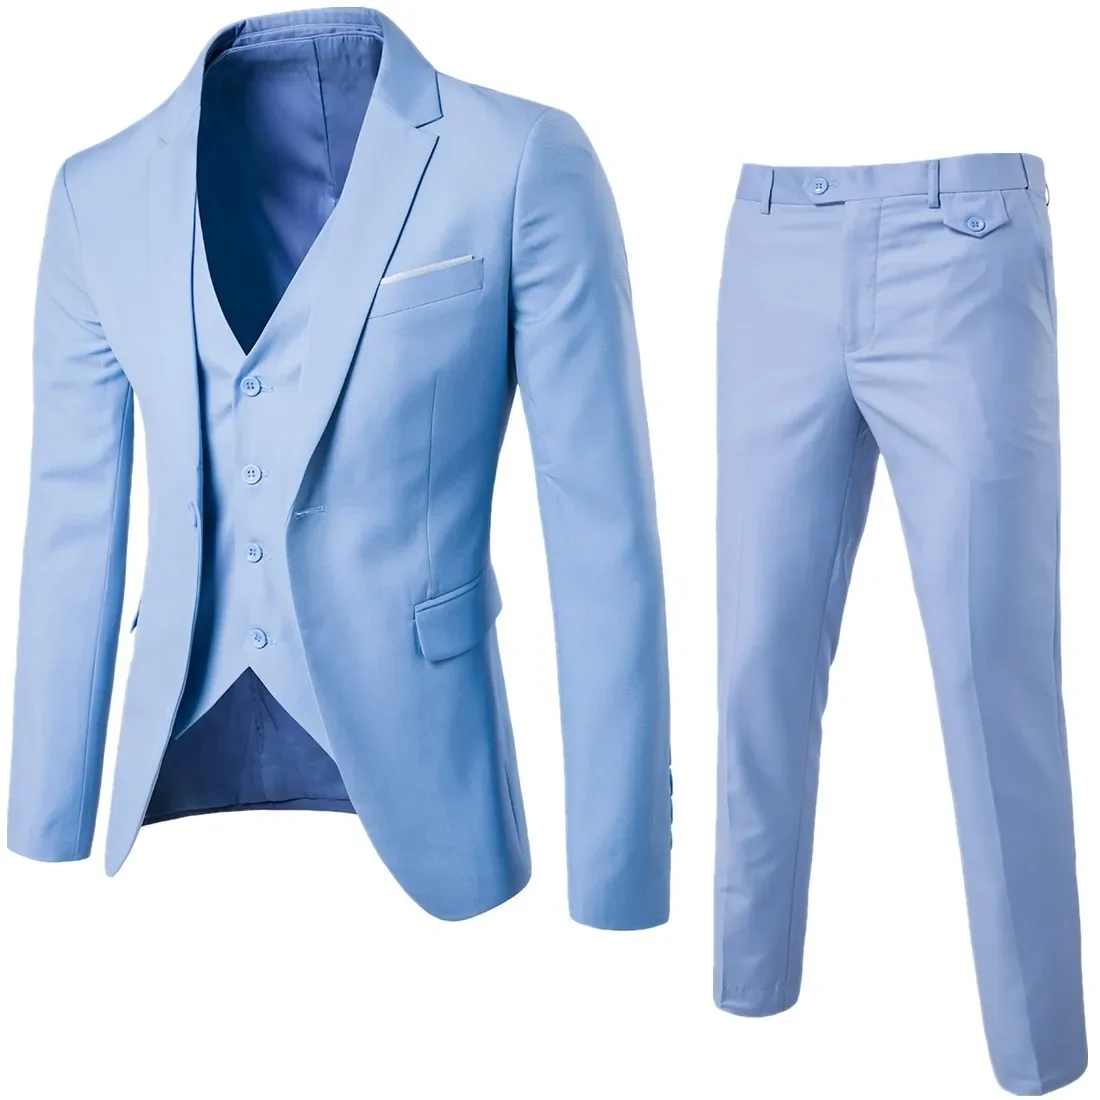 

weiX27-Full set of groom and groomsmen men's formal college student interview suit three-piece suit